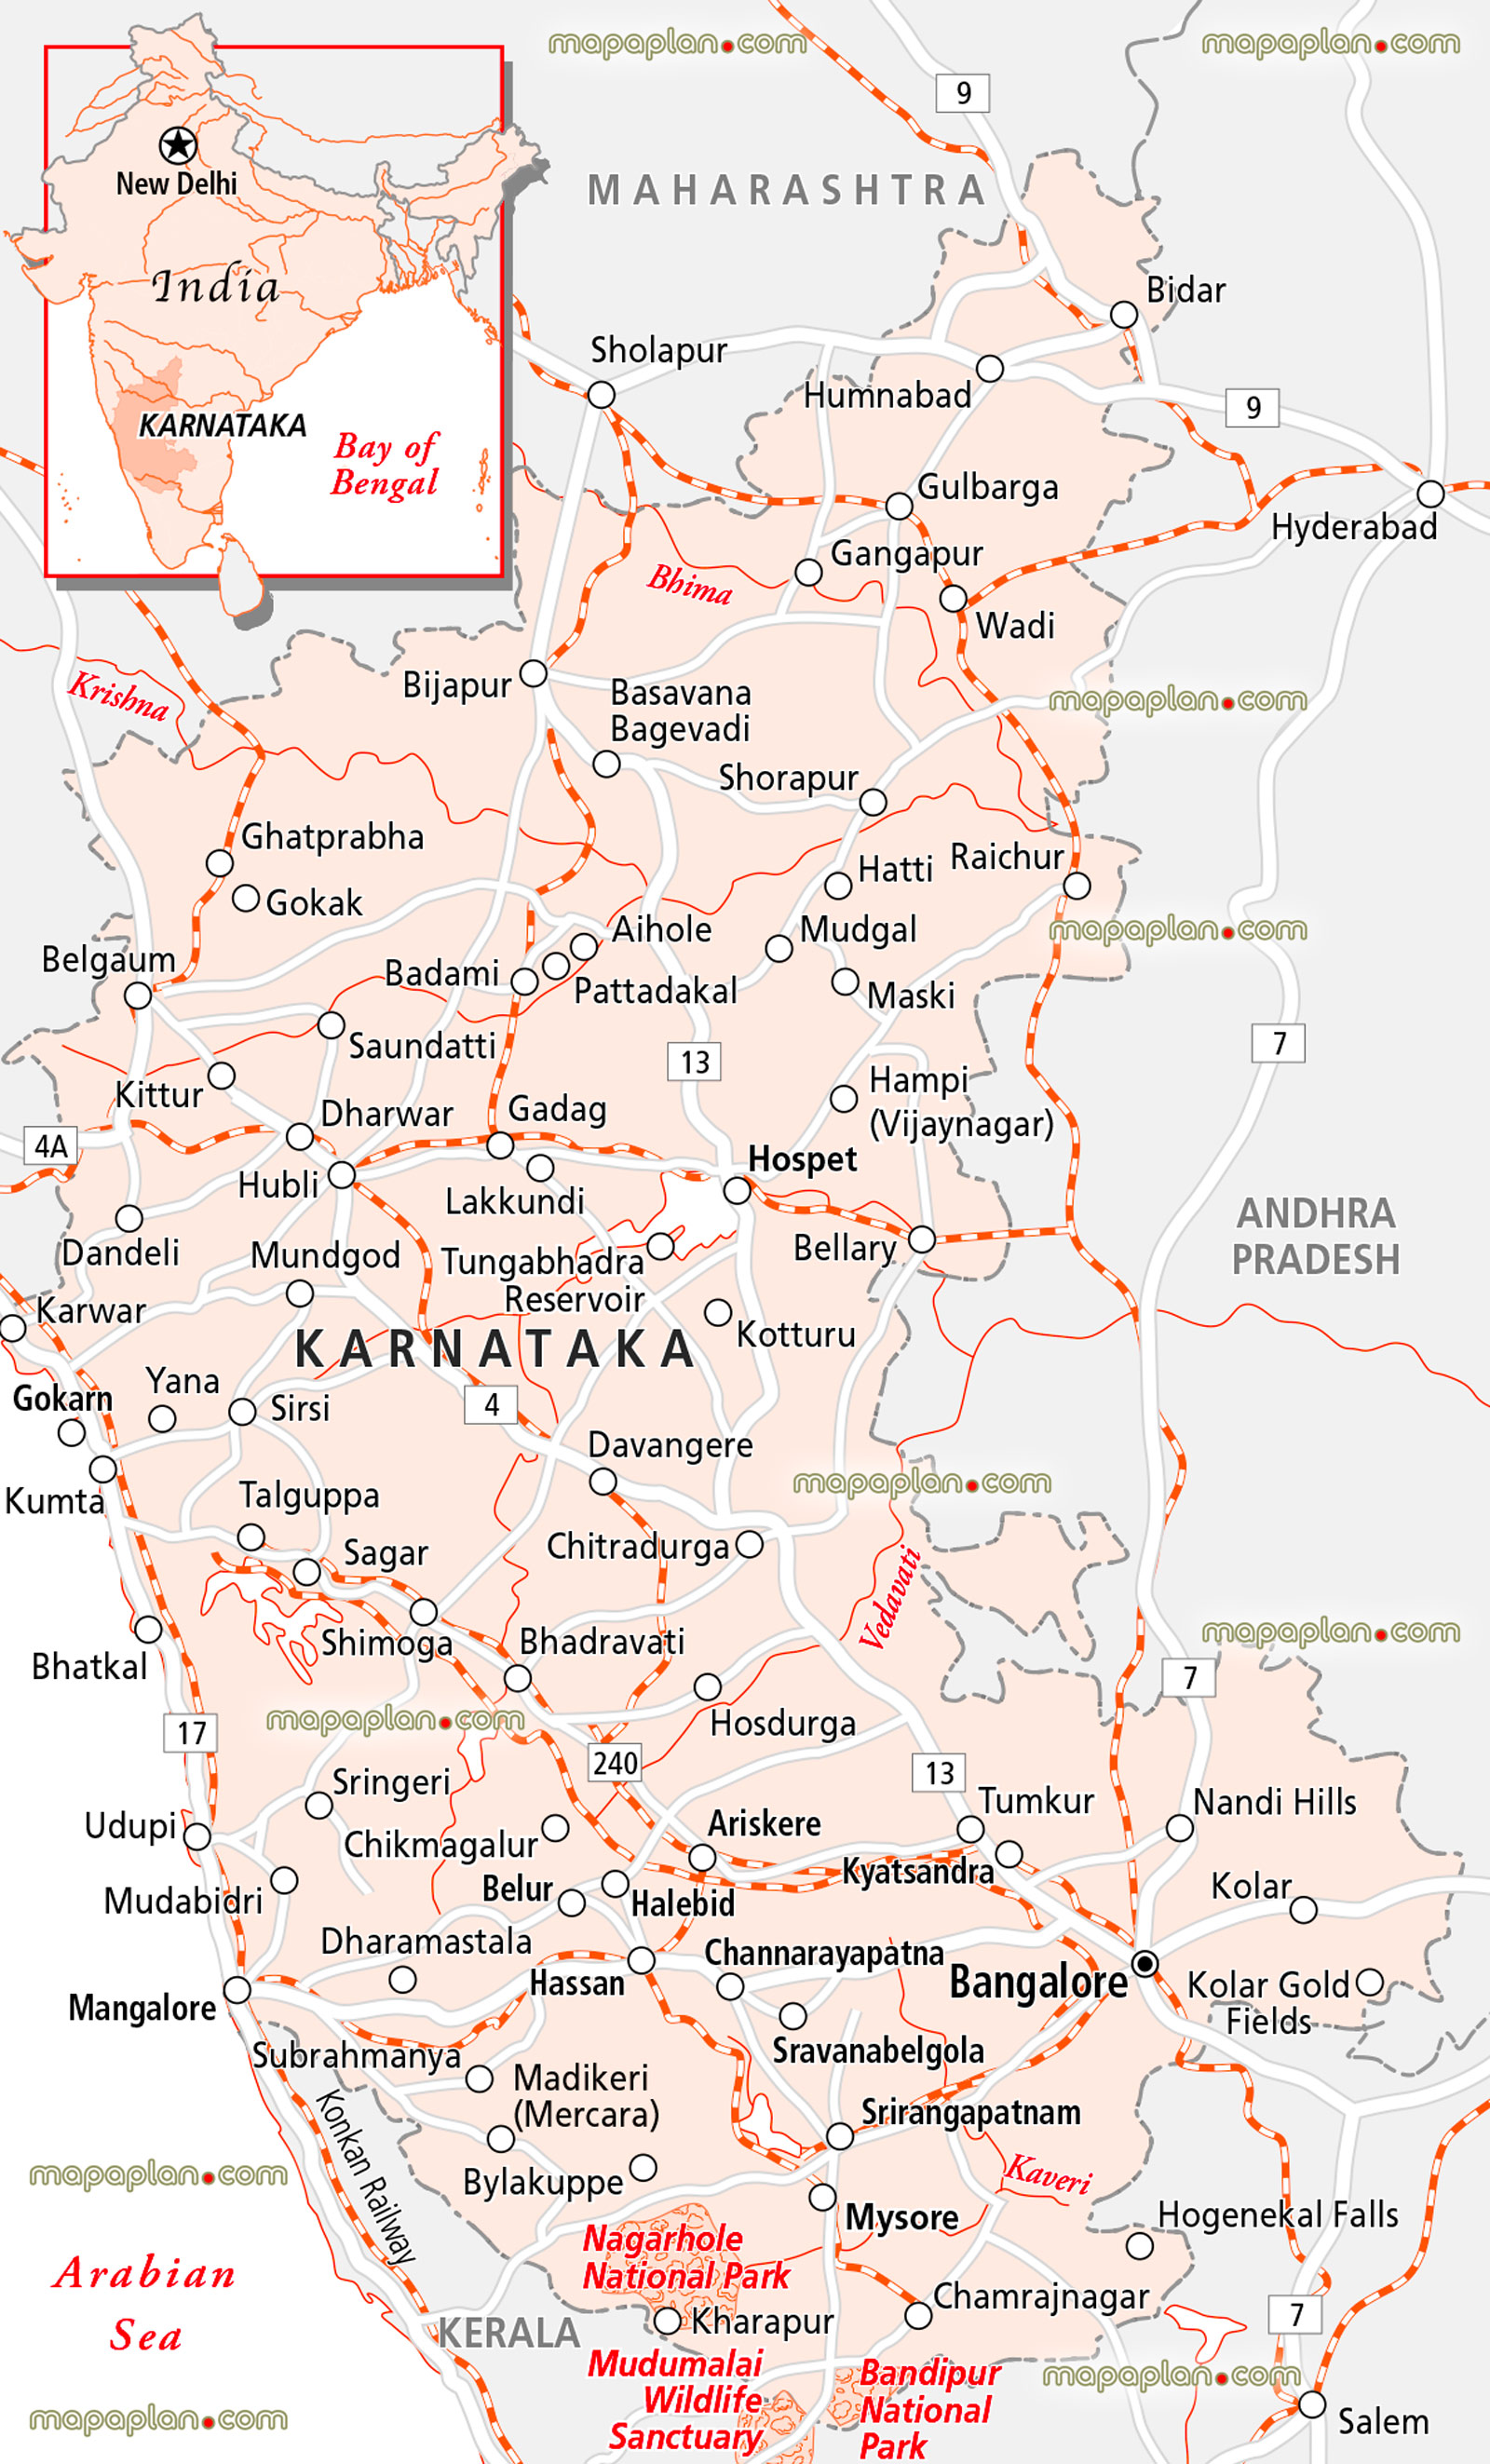 bangalore karnataka region india free printable virtual explorer visitors plan roads train lines places cities townss Bangalore Top tourist attractions map